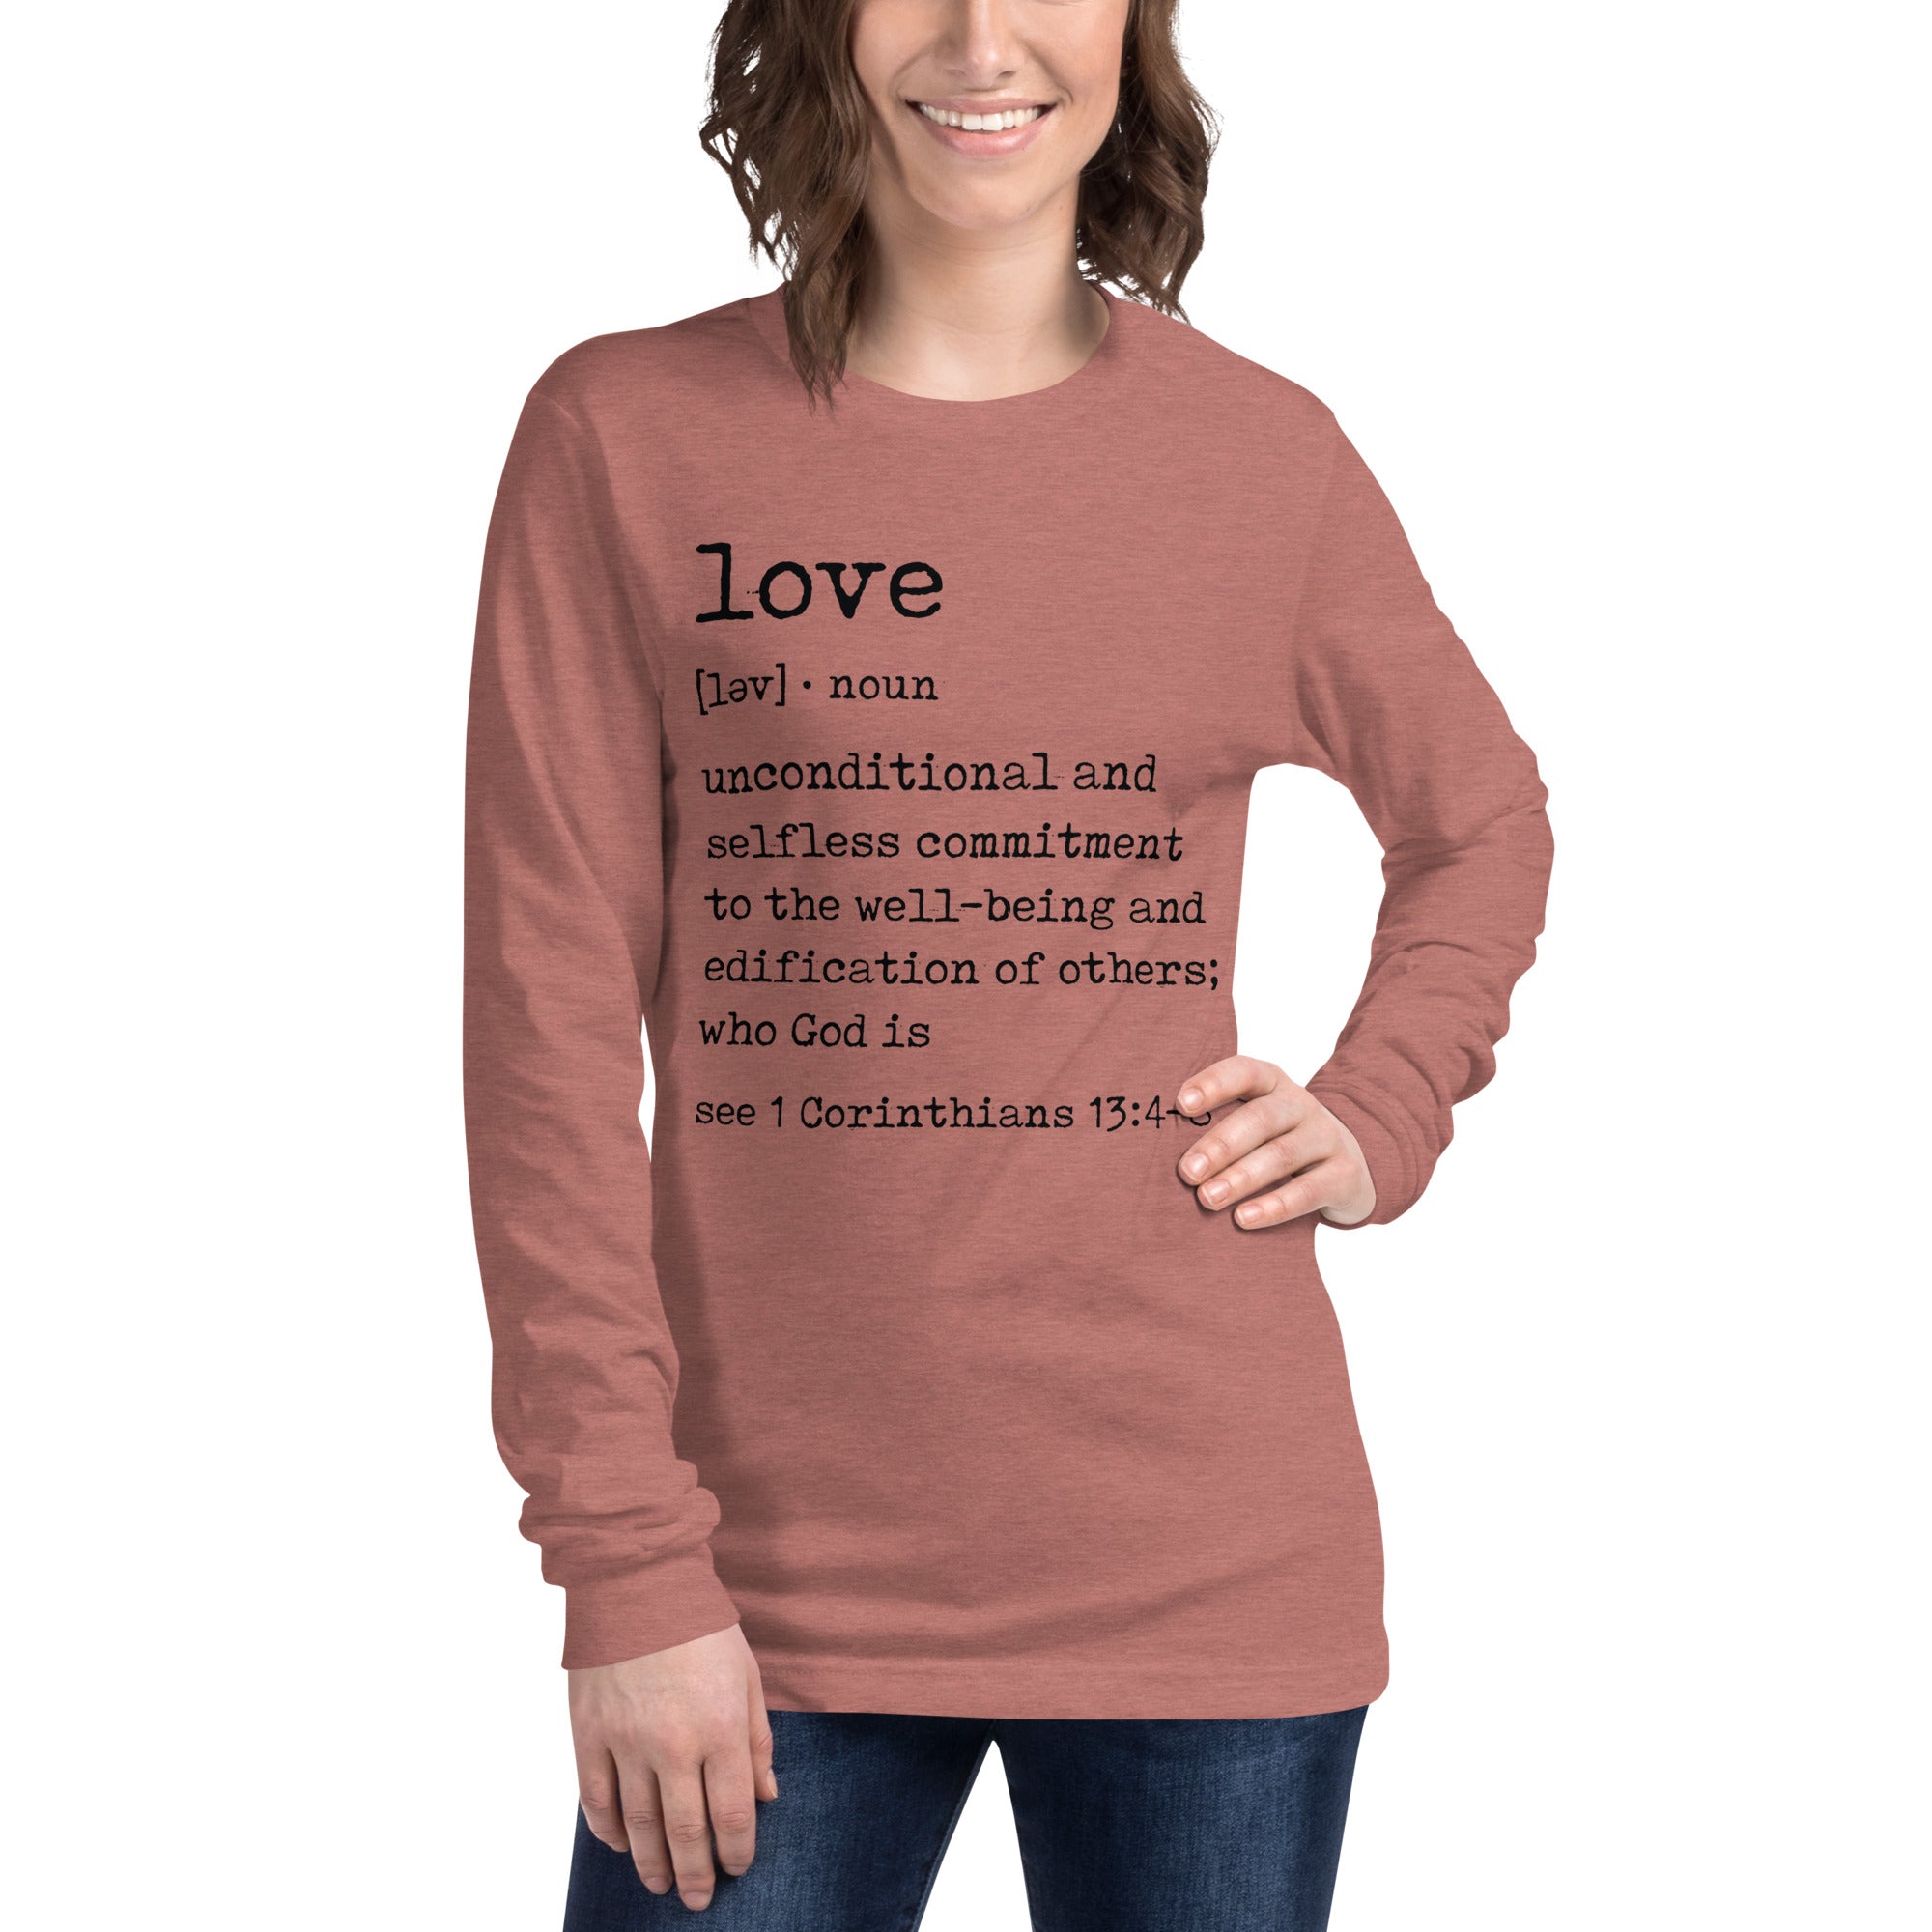 Love Definition - Women's Long Sleeve T-Shirt